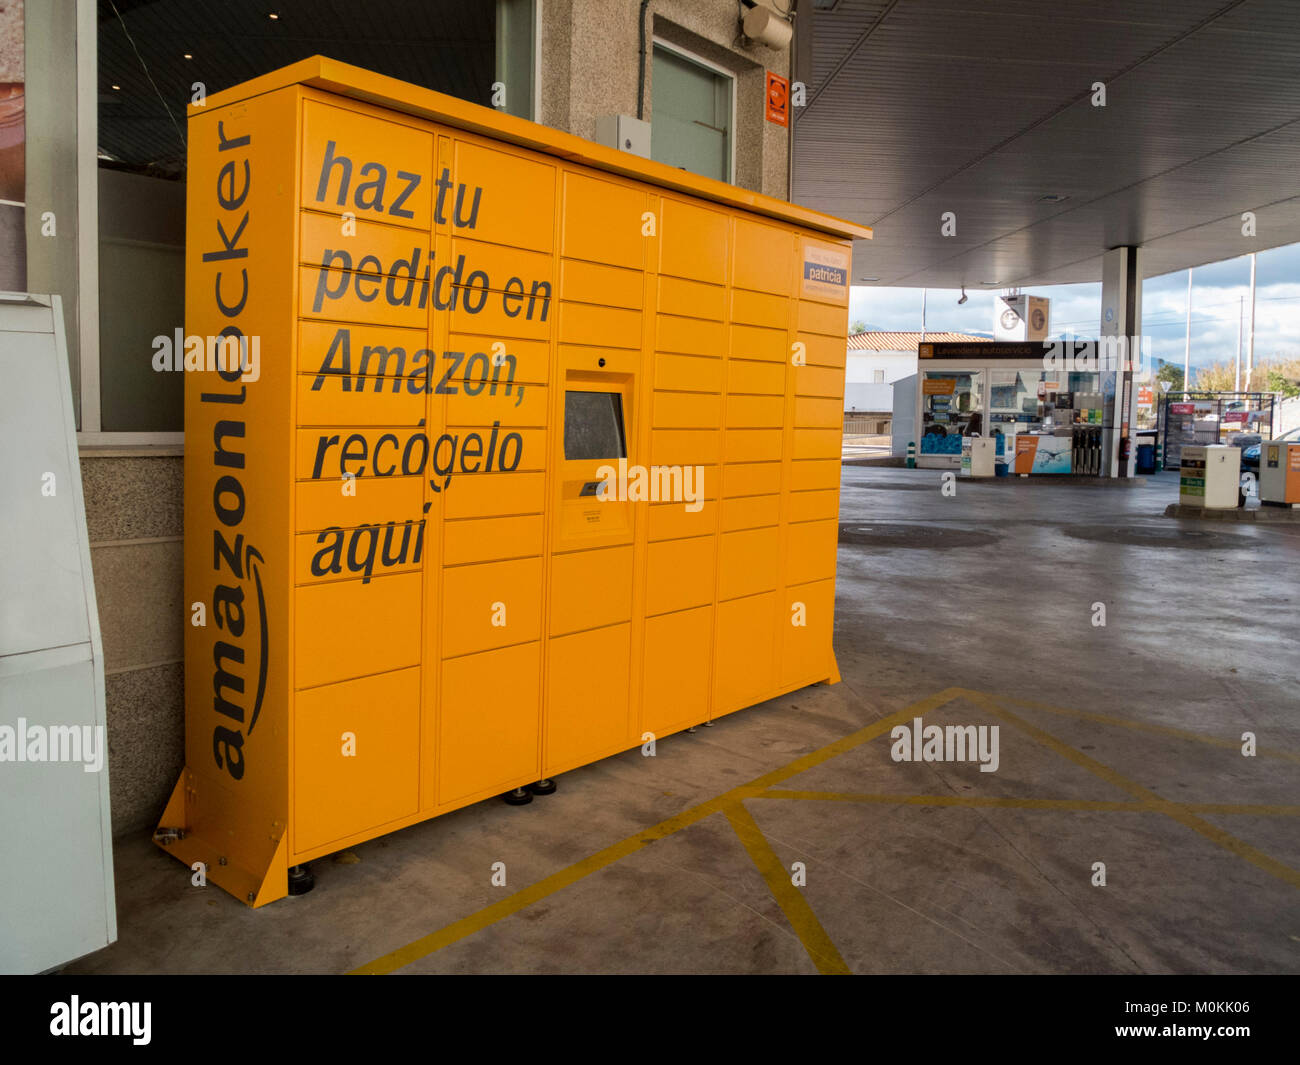 Casillero Amazon Fotos e Imágenes de stock - Alamy